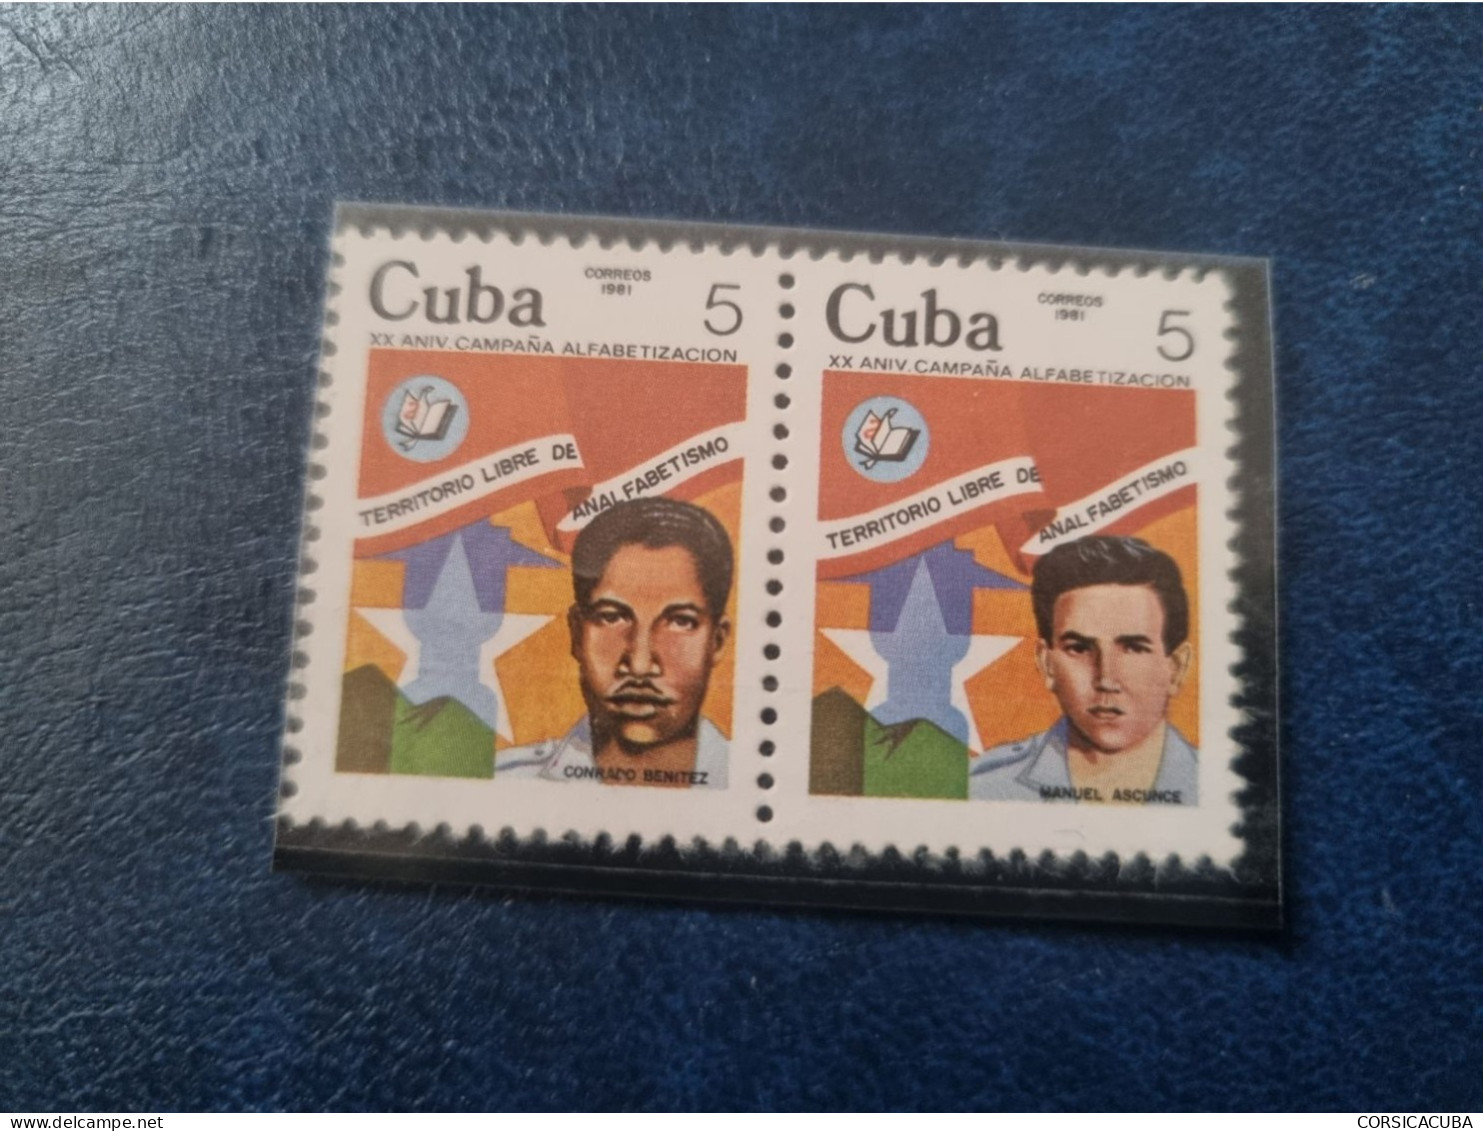 CUBA  NEUF  1981   CAMPANA  DE  ALFABETIZACION  //  PARFAIT  ETAT  //  1er  CHOIX  // Bloc De 4 - Neufs